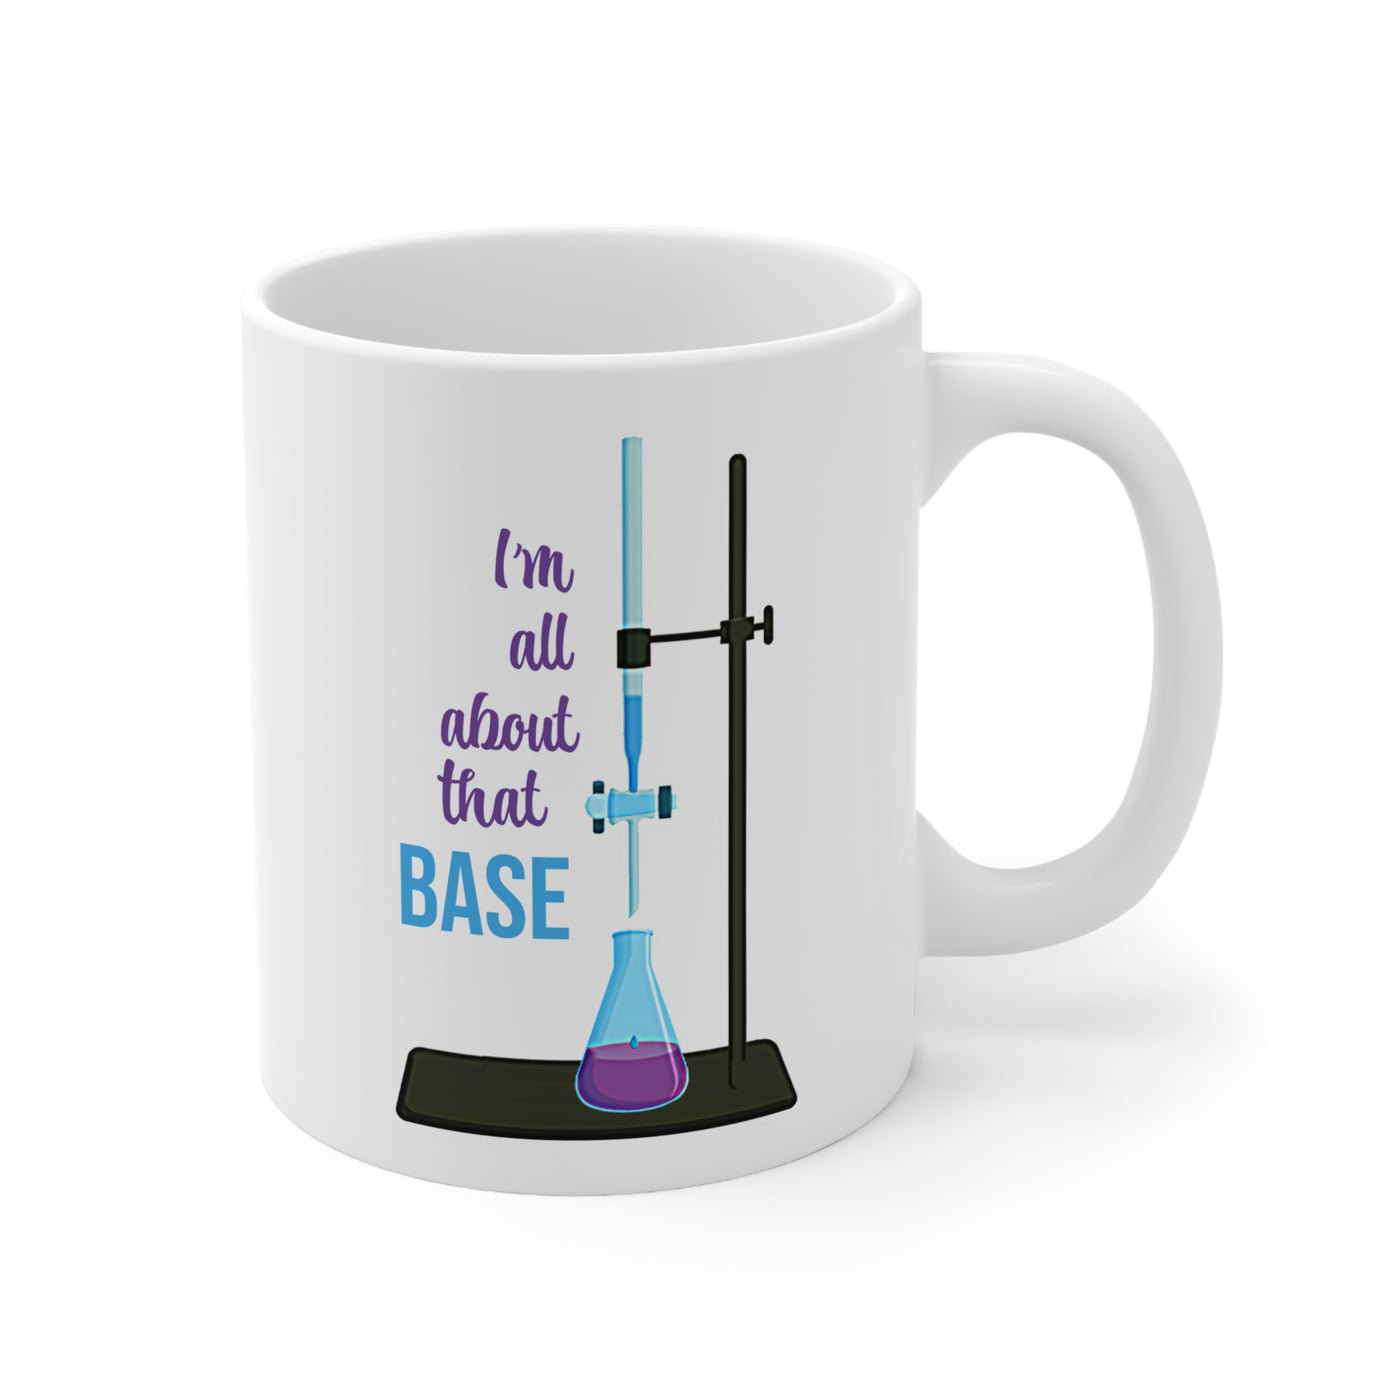 I'm All About that Base - Ceramic Mug 11oz